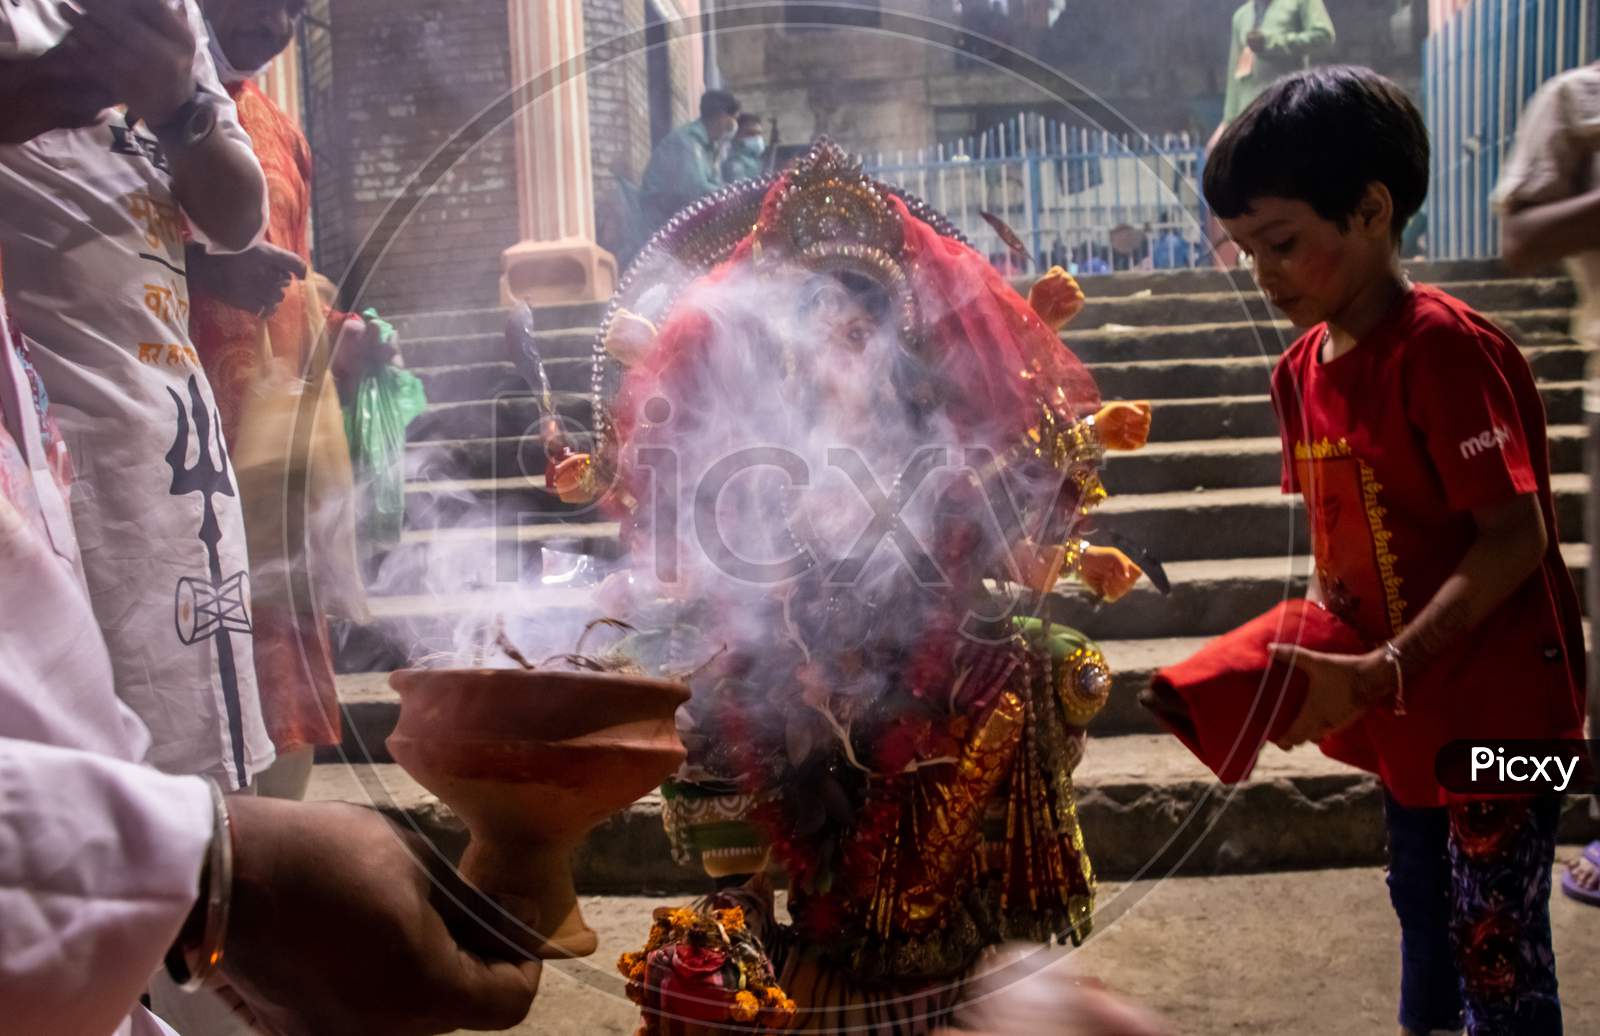 Biggest Religious Festival Of Hinduism